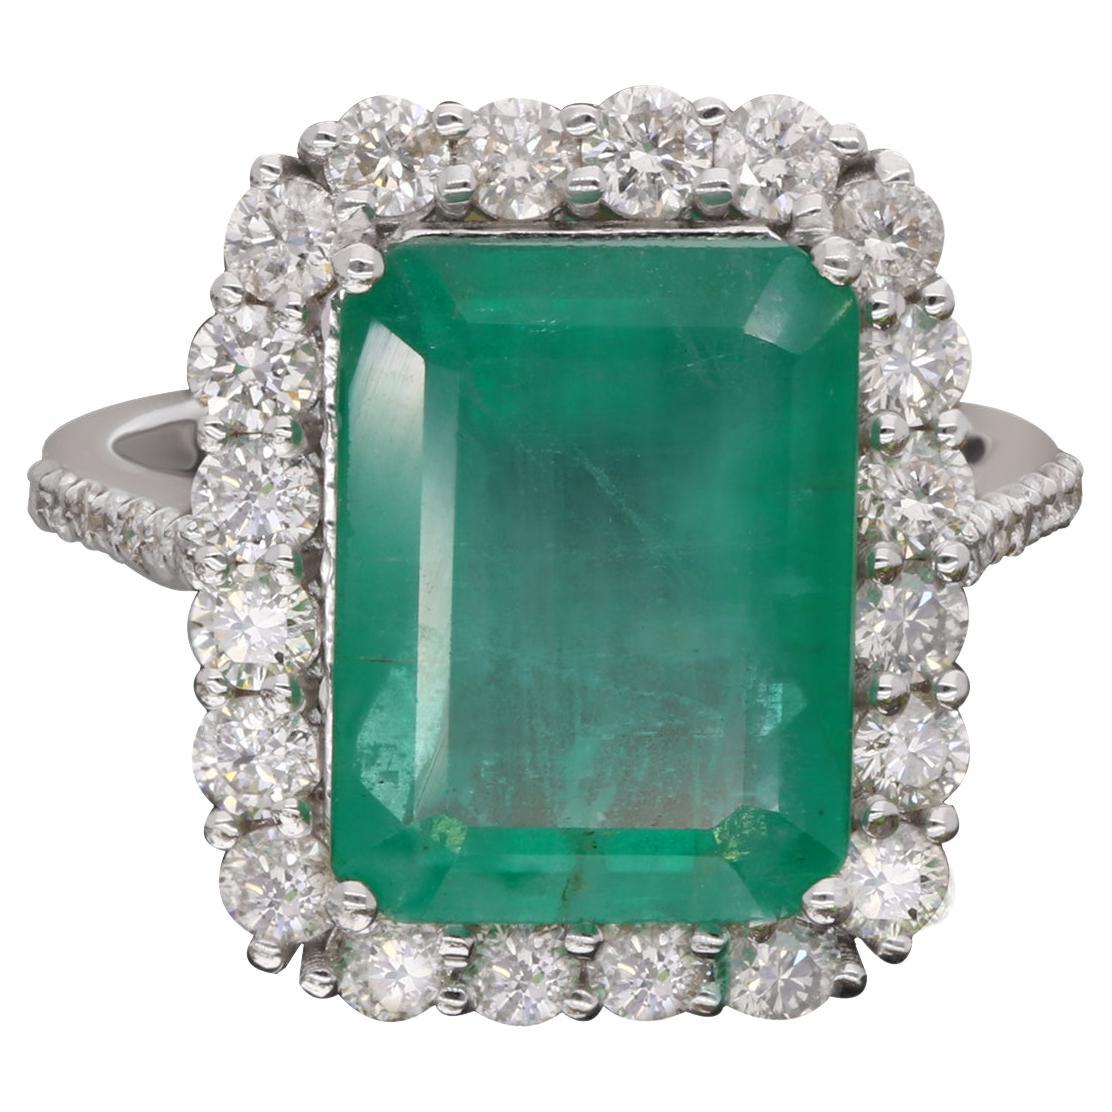 Real Zambian Emerald Gemstone Cocktail Ring Diamond 18 Karat White Gold Jewelry For Sale